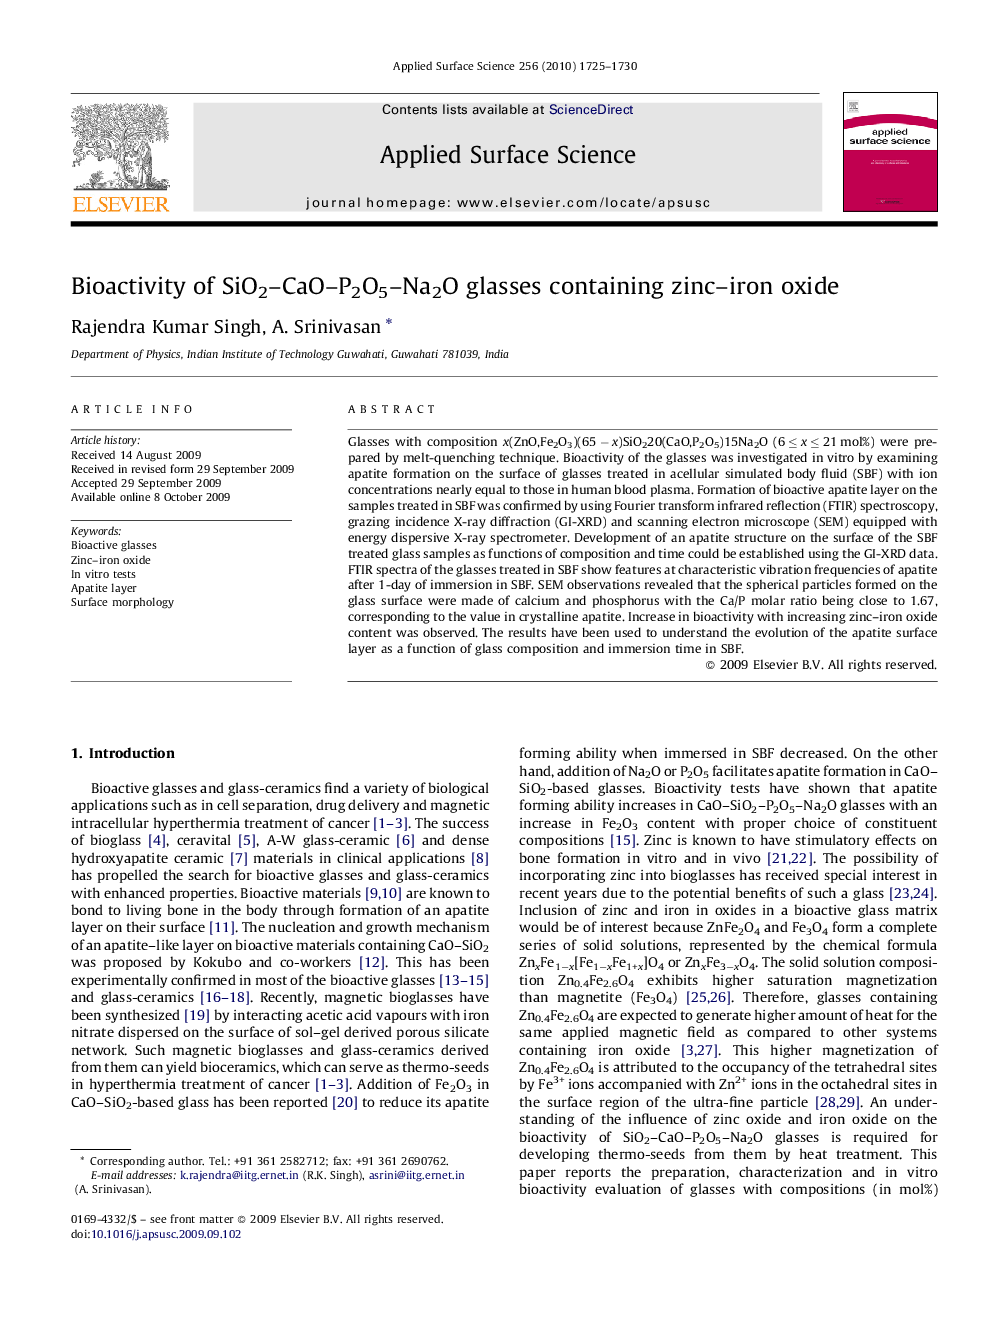 Bioactivity of SiO2-CaO-P2O5-Na2O glasses containing zinc-iron oxide